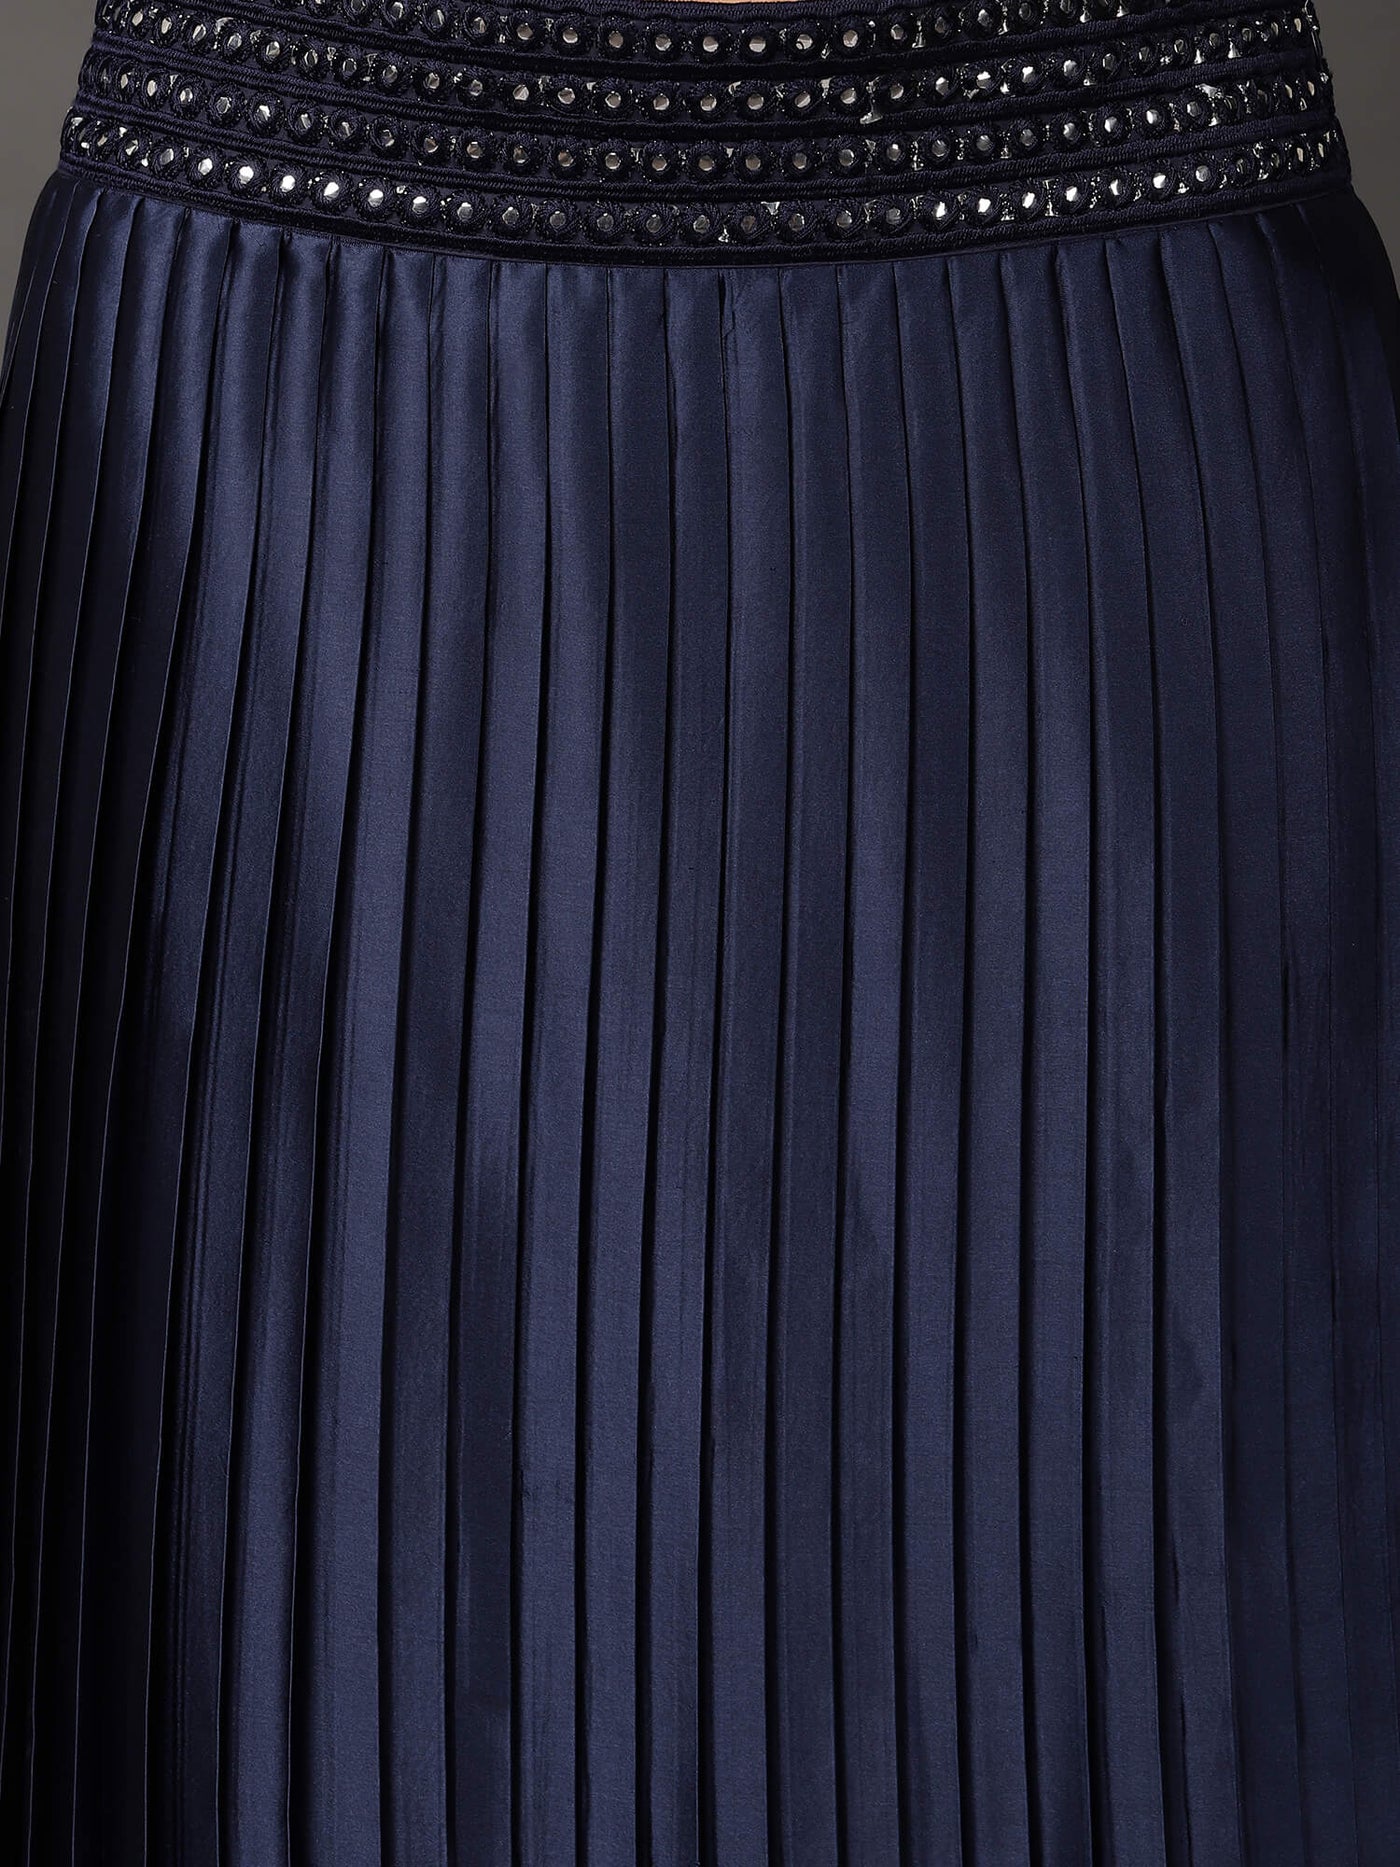 Navy Blue Satin Embroidered Skirt